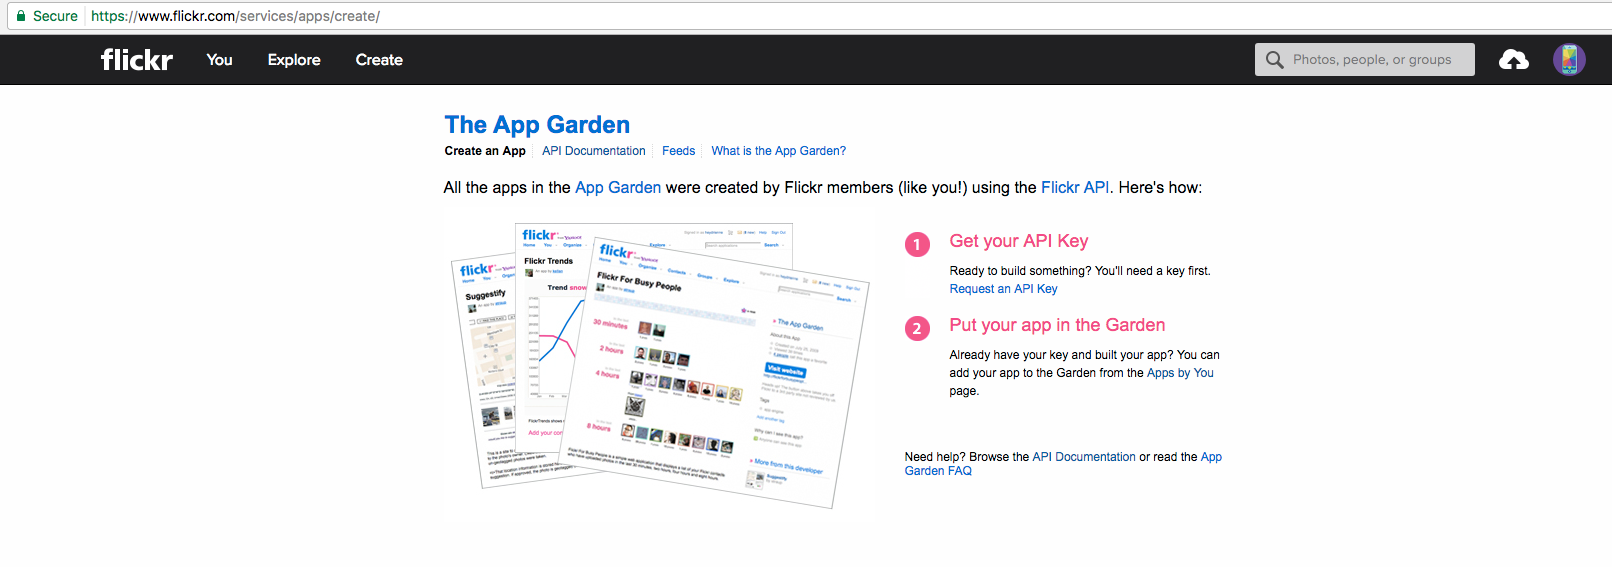 To set up Flickr API KEY: